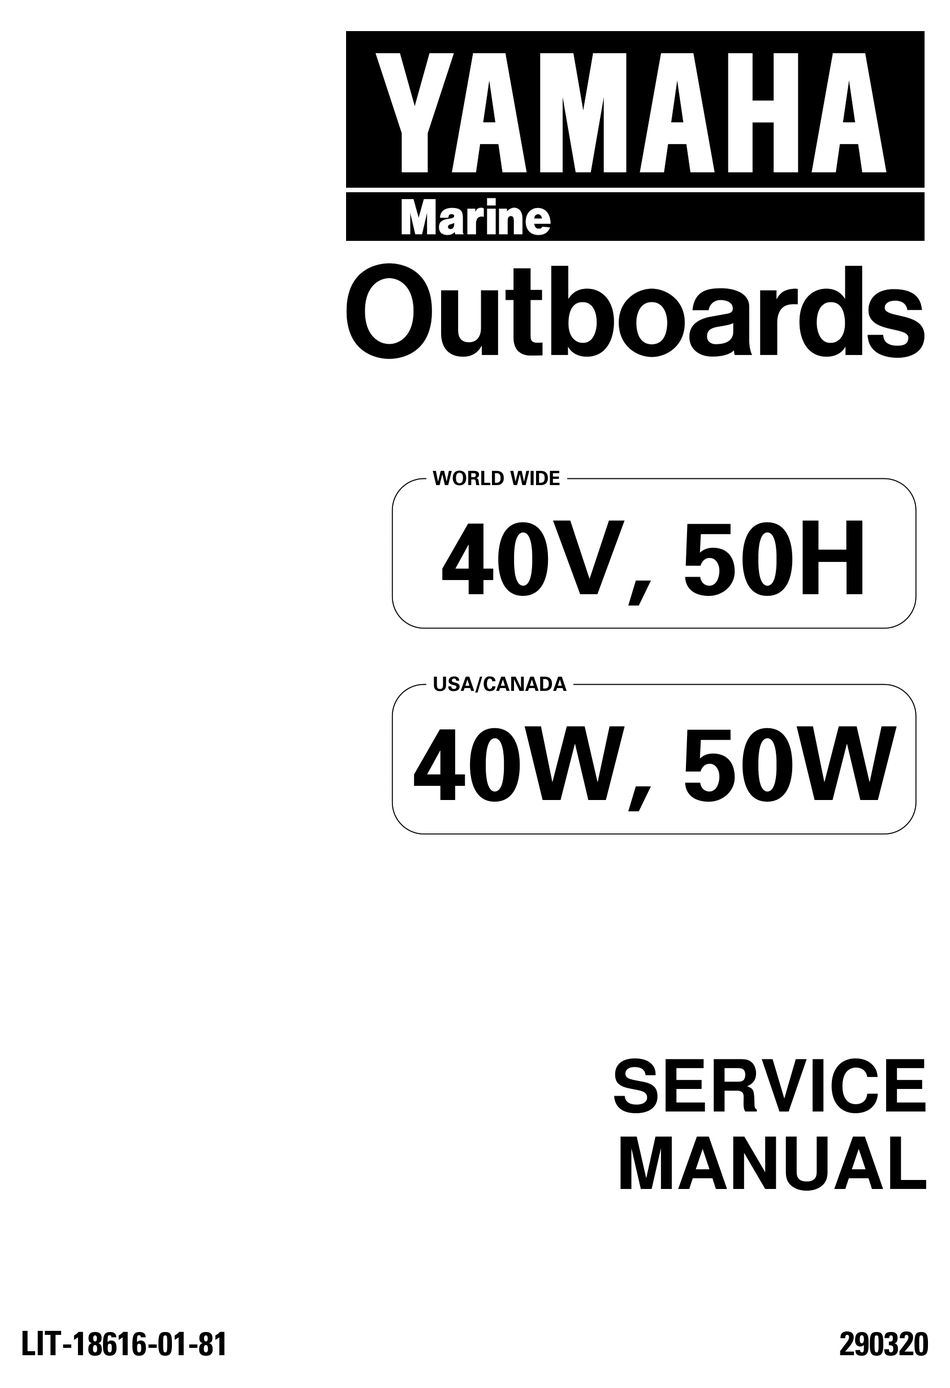 Yamaha 40v Service Manual Pdf Download Manualslib